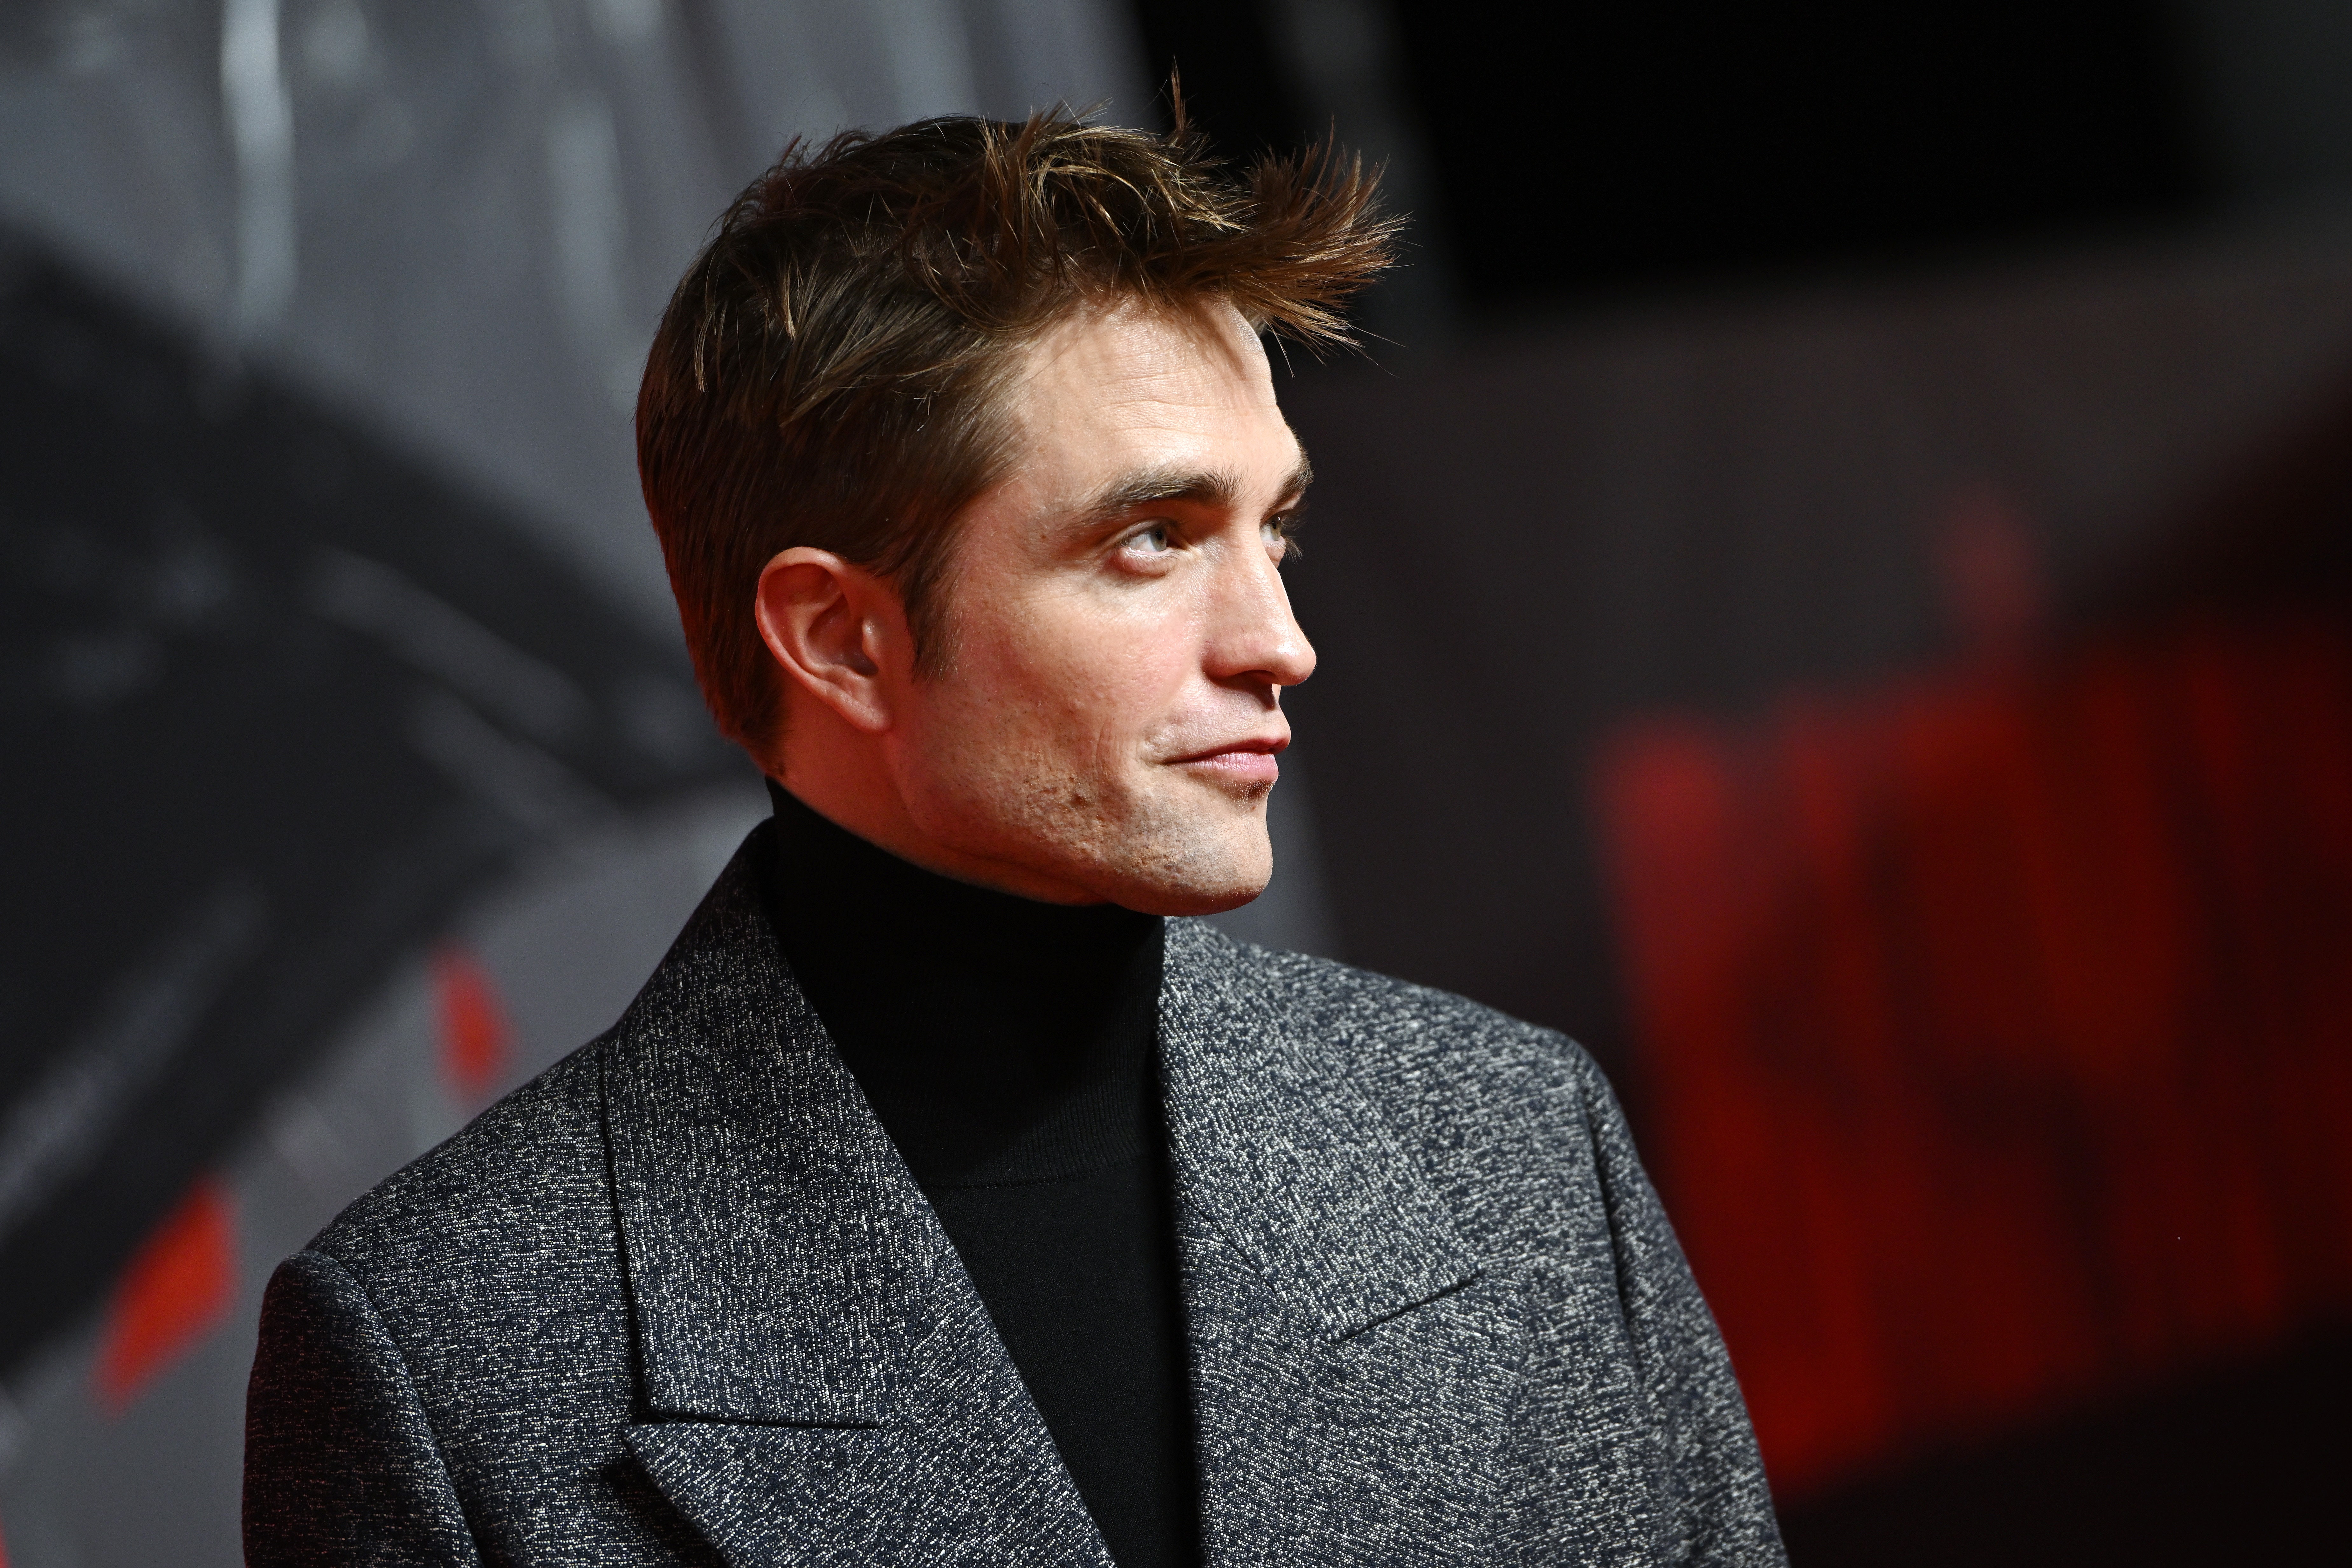 Robert Pattinson's The Batman Premiere Look Is Perfectly R Patz